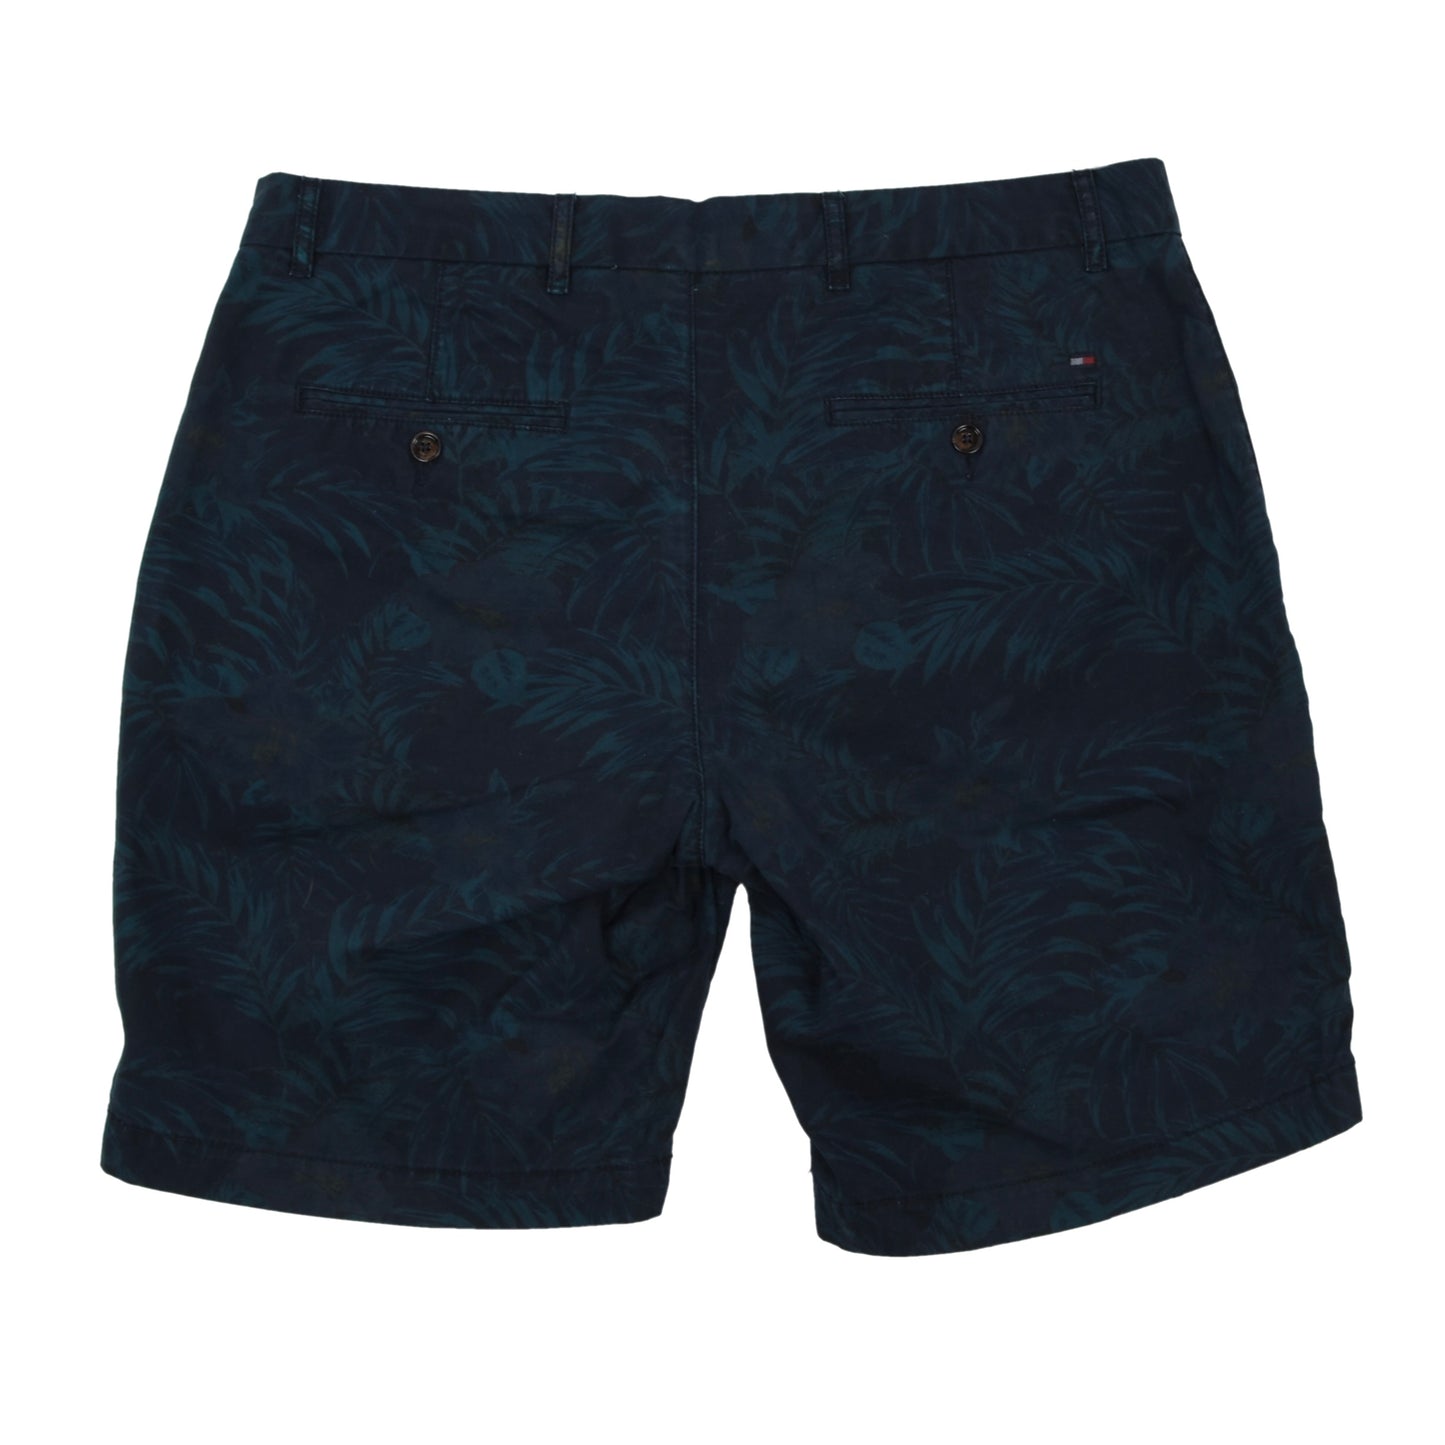 Tommy Hilfiger Brooklyn Shorts Size 36 - Floral Print